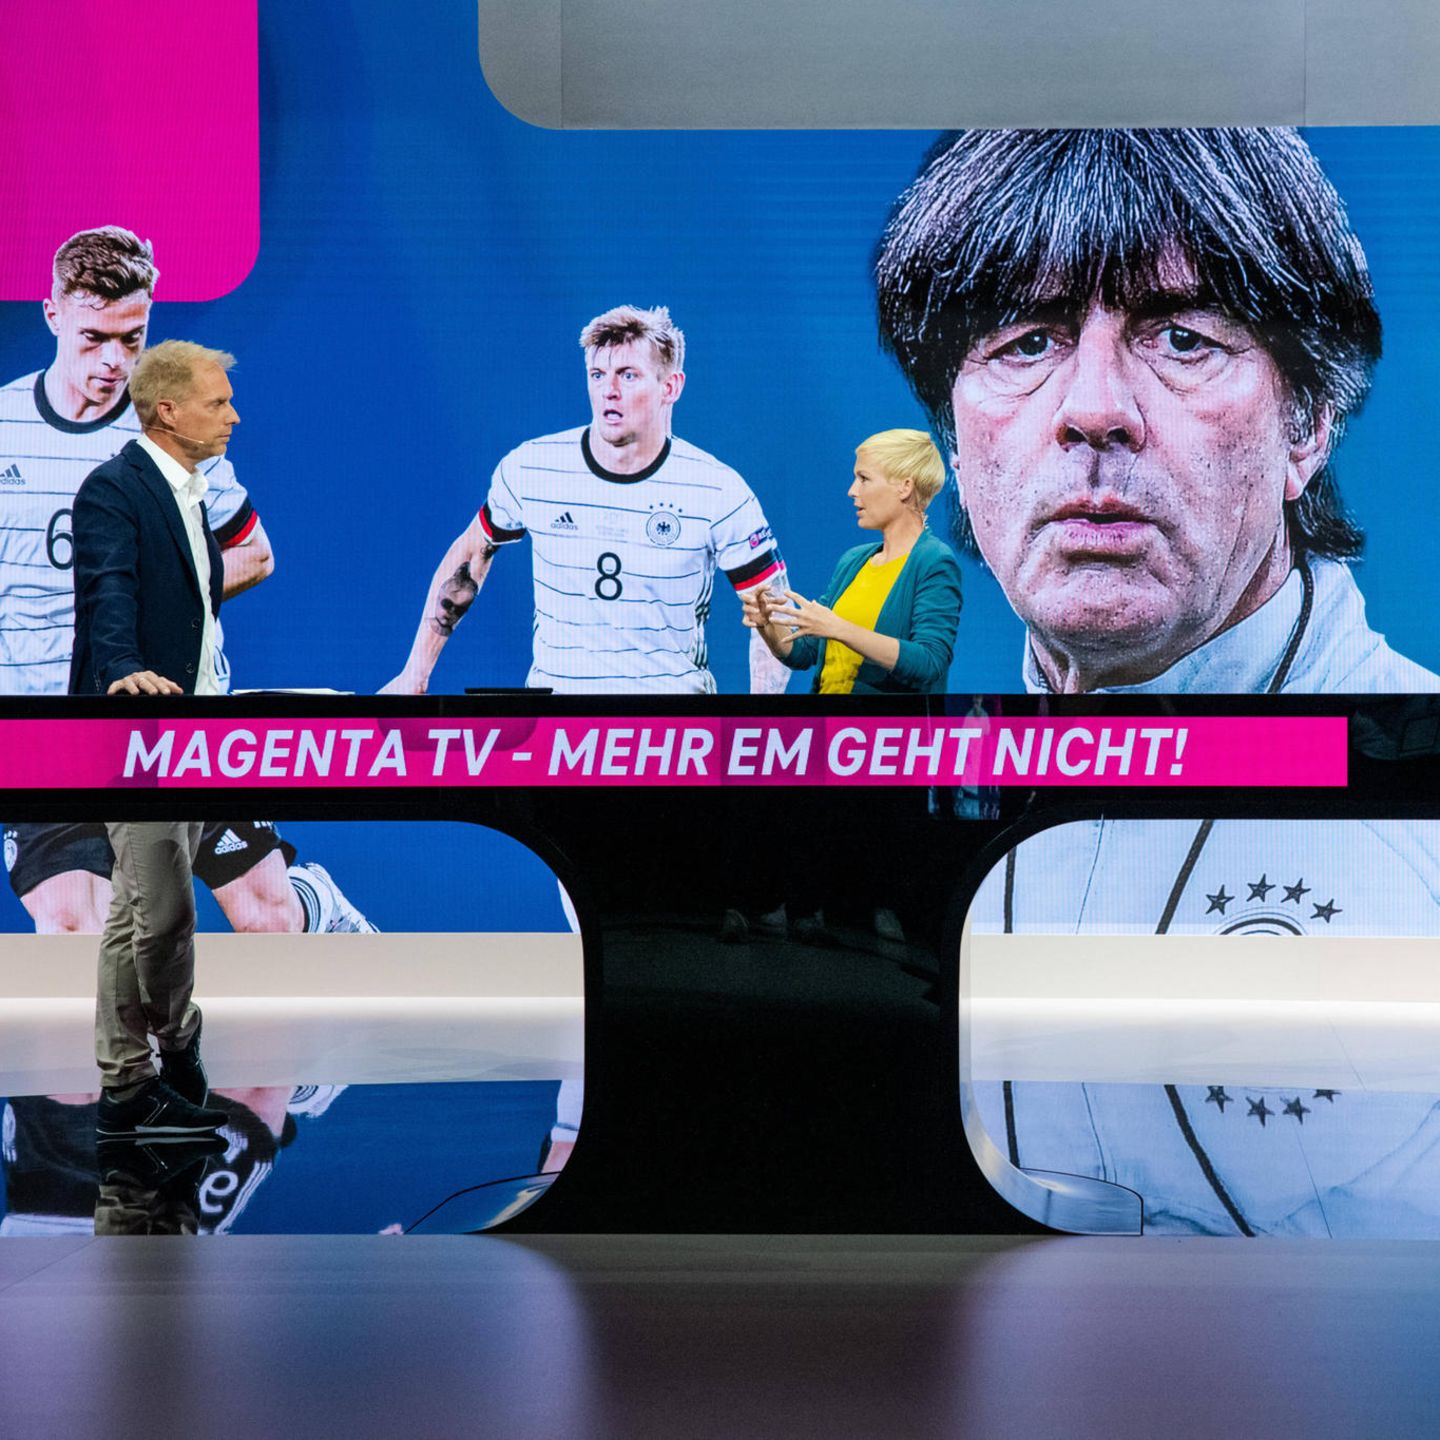 MagentaTV Telekom-Service beim Exklusiv-Spiel massiv gestört STERN.de